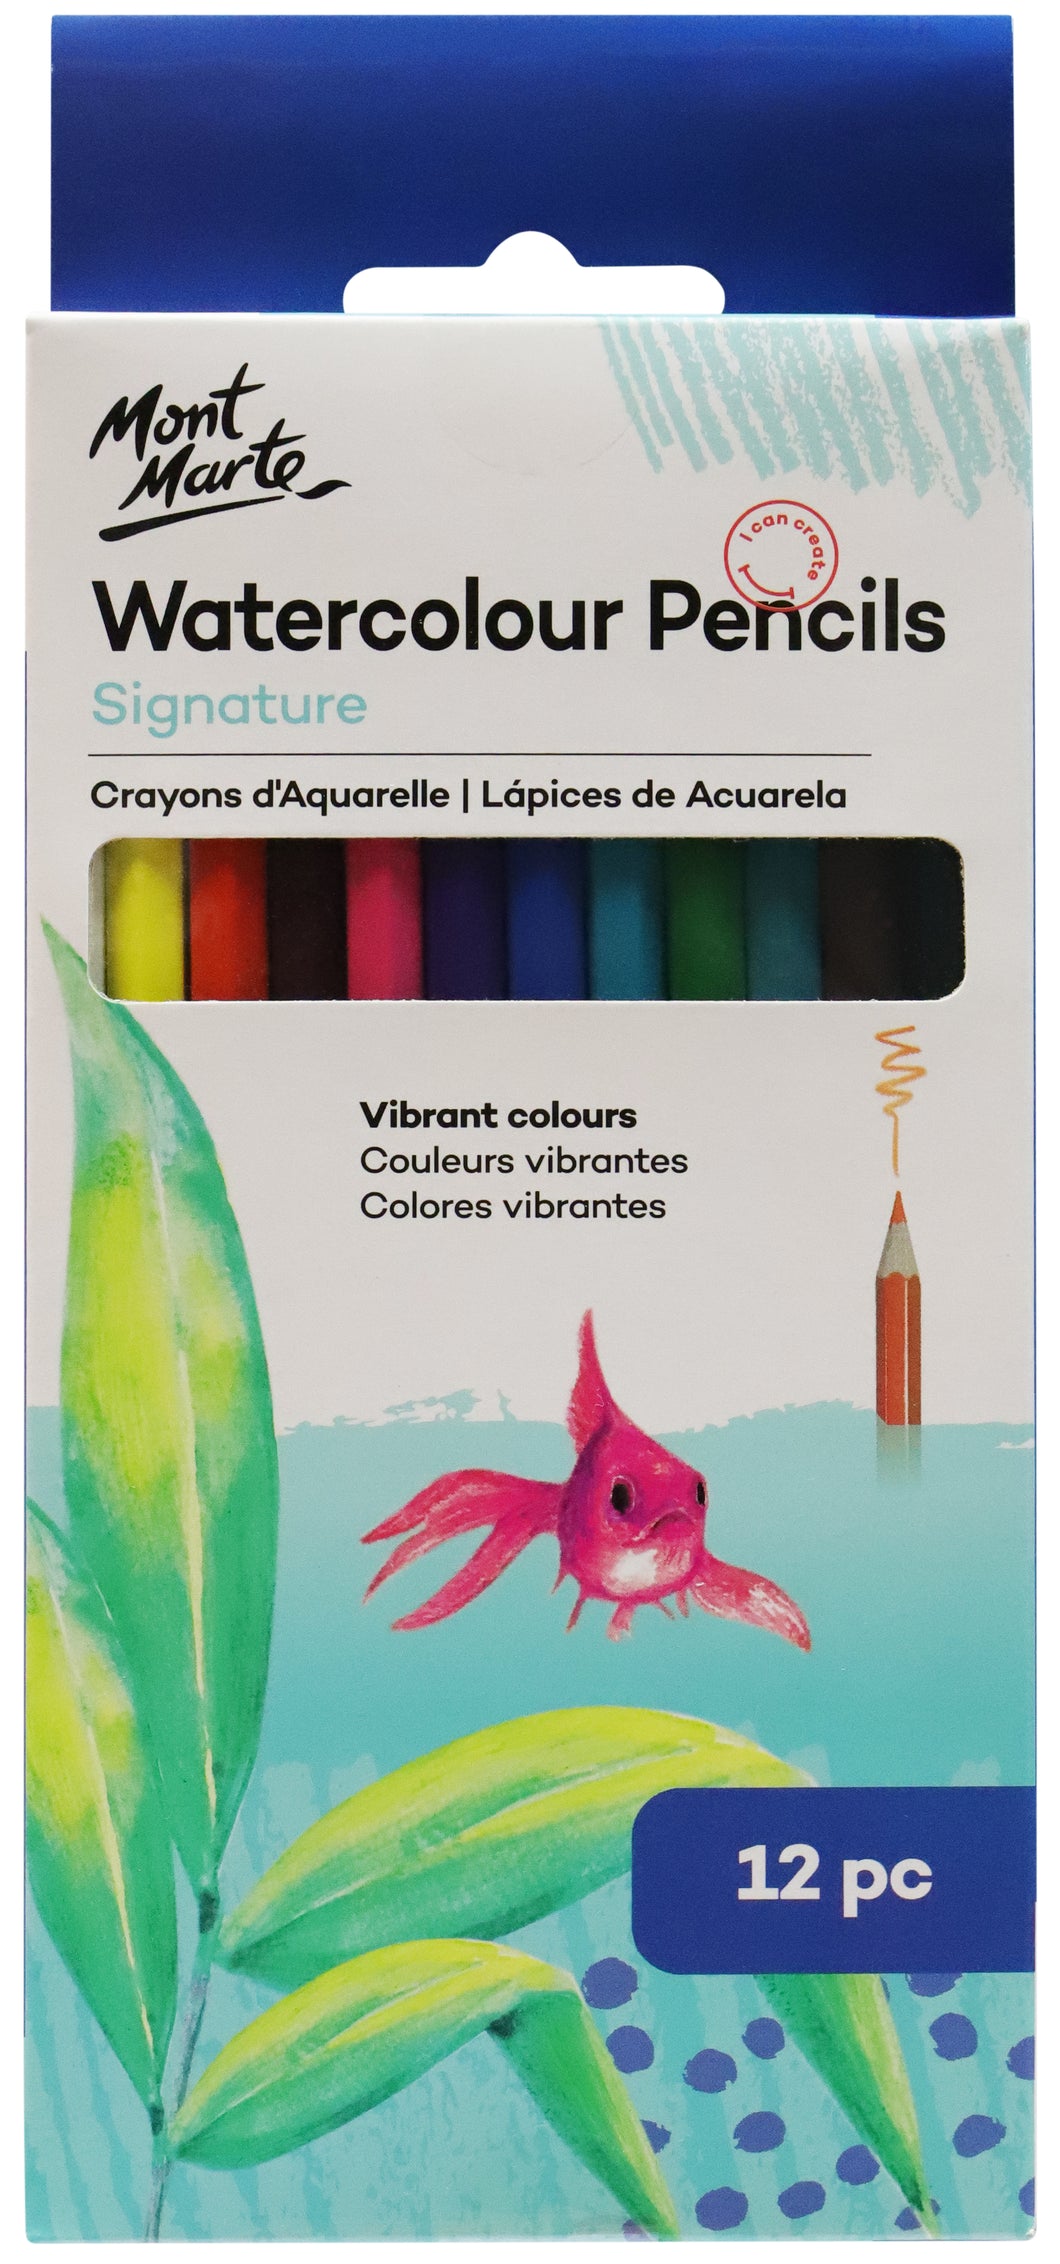 Monte Marte Watercolour Pencils 12pc